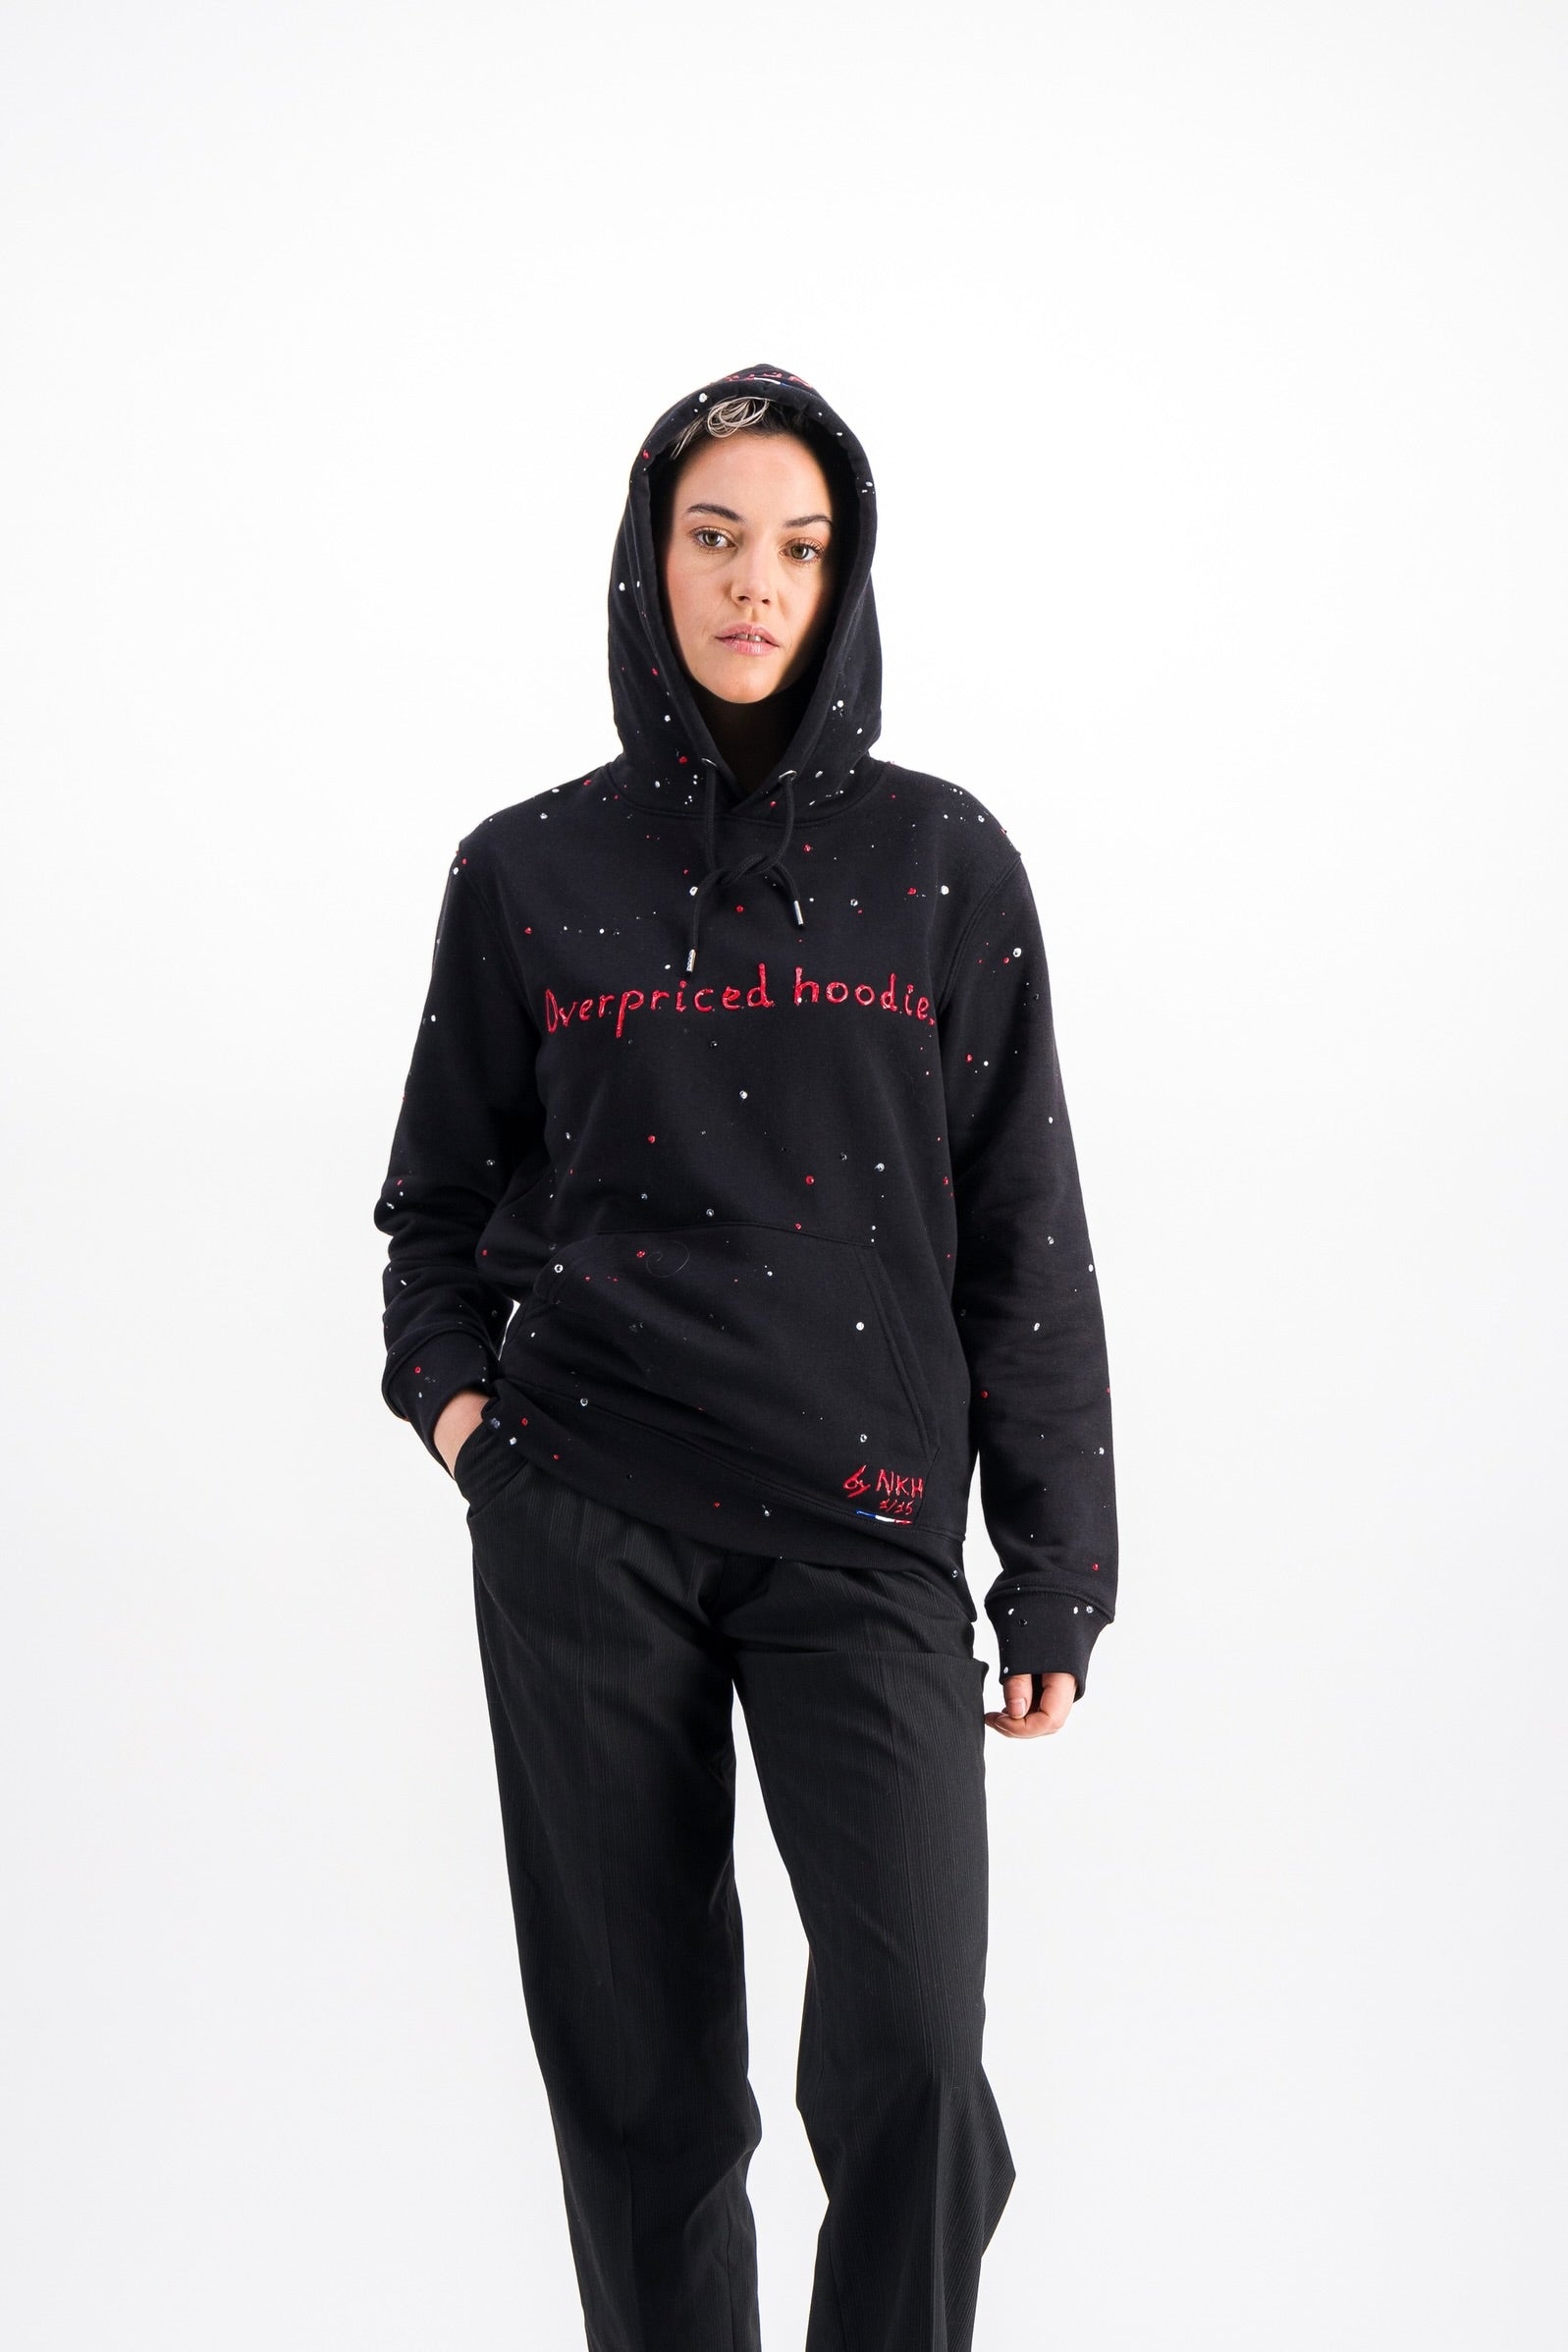 Sweat à capuche noir - Overpriced hoodie (Swarovski)